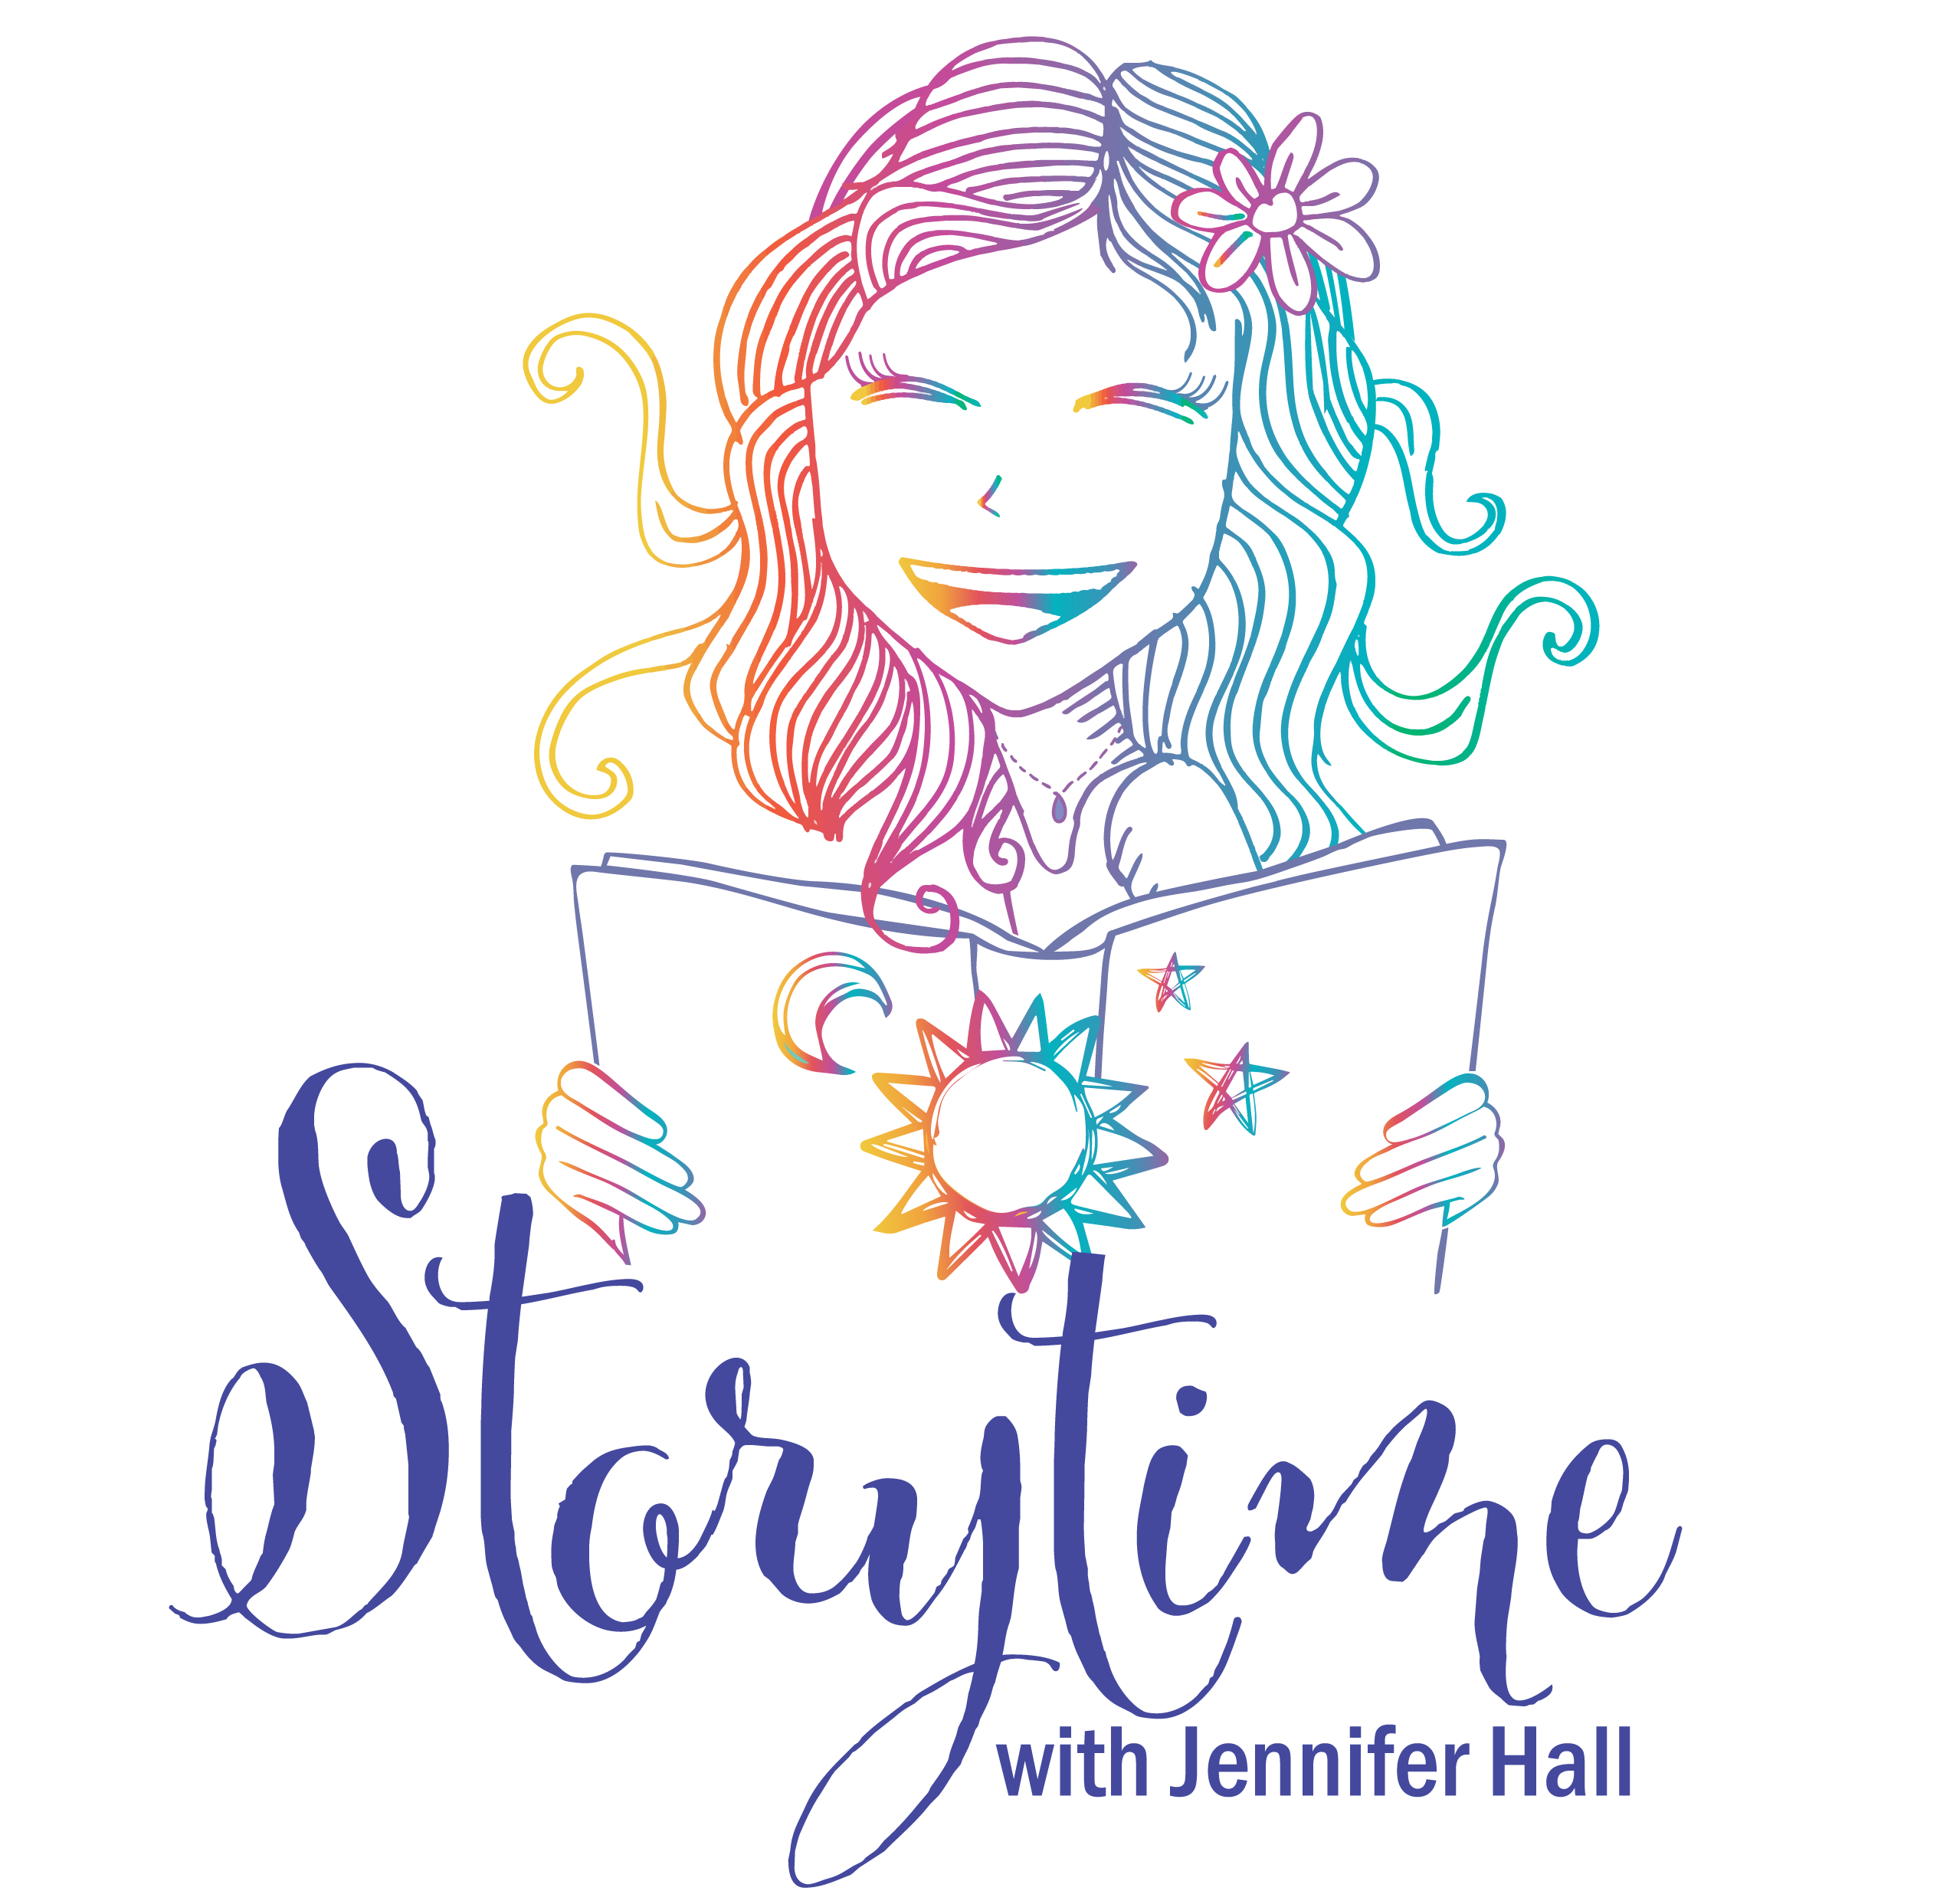 Storytime with Jennifer Hall